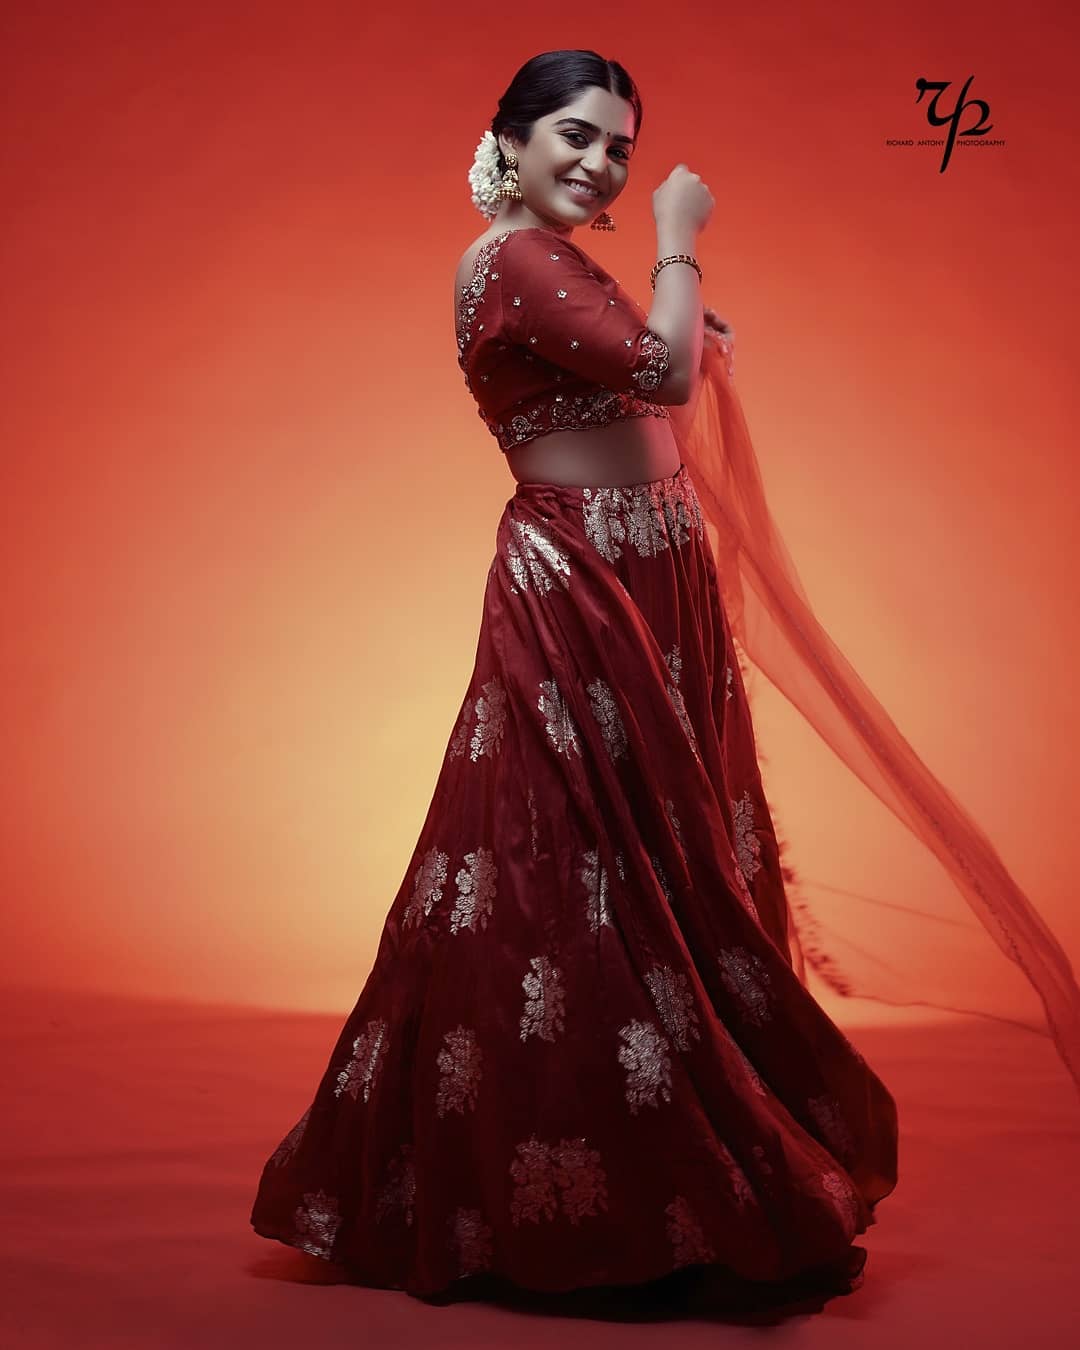 Gouri G Kishan in red lehenga photos - South Indian Actress